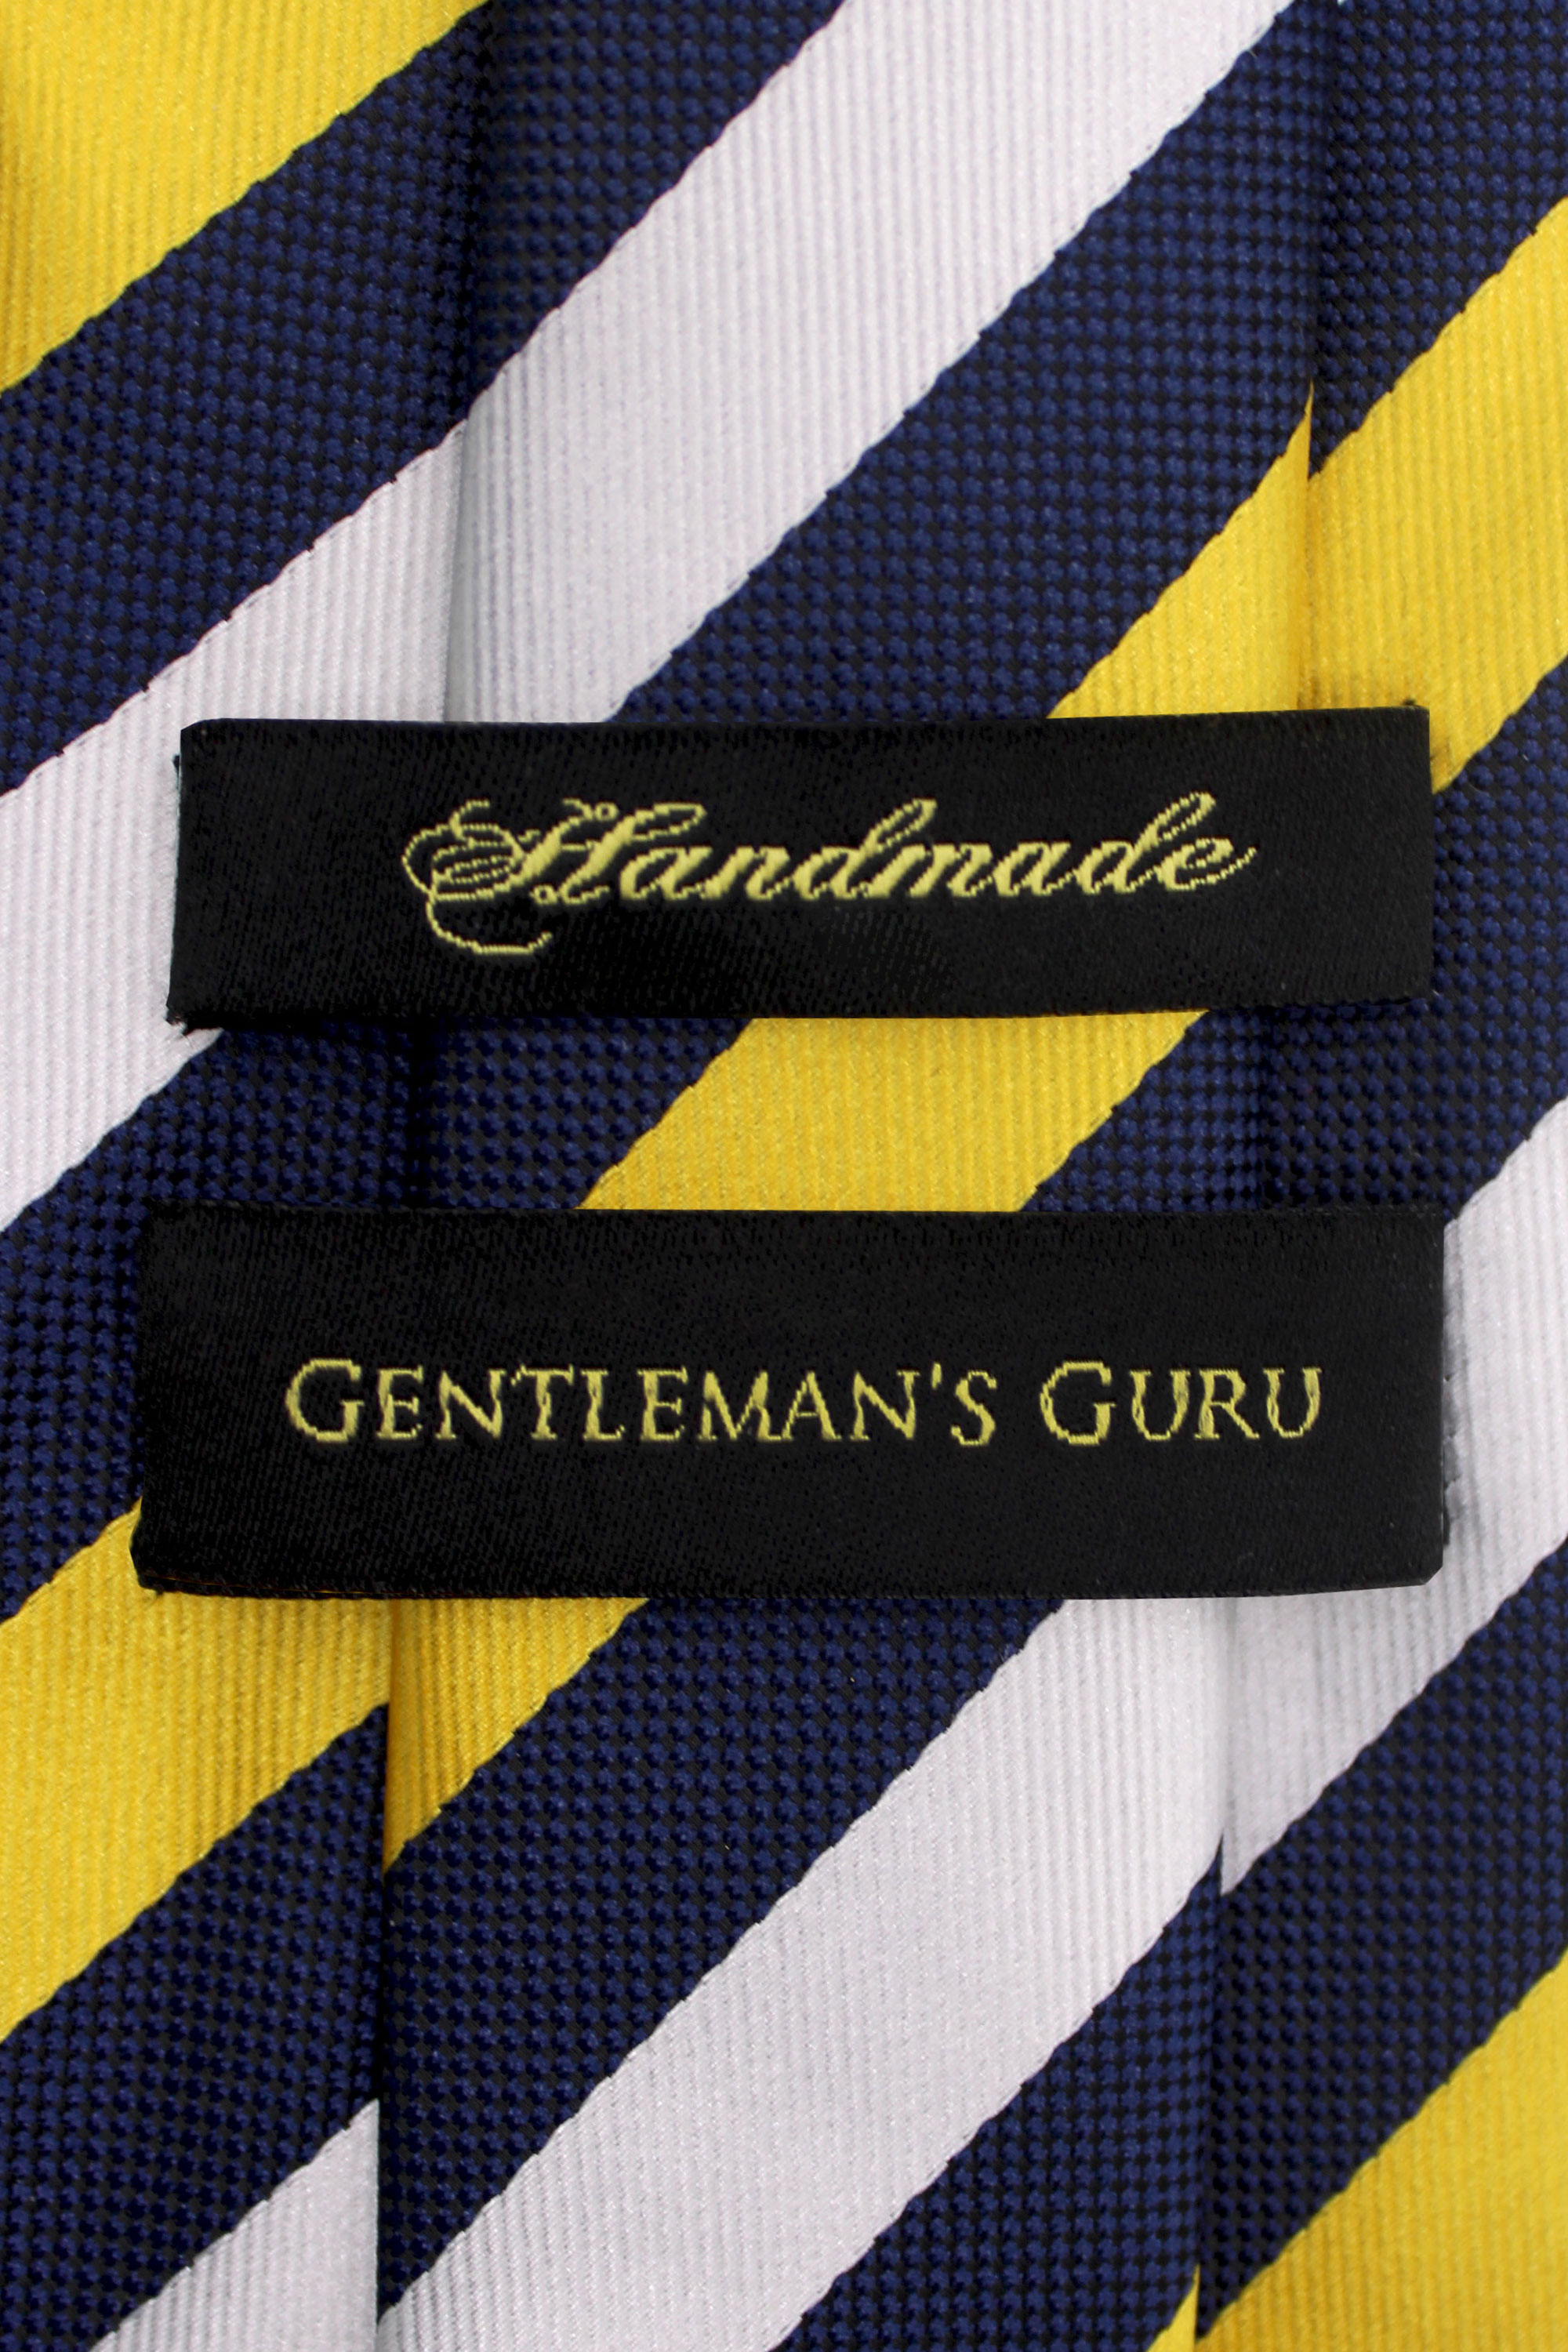 Navy-Blue-White-Gold-and-Gold-Striped-Branded-Tie-from-Gentlemansguru.com